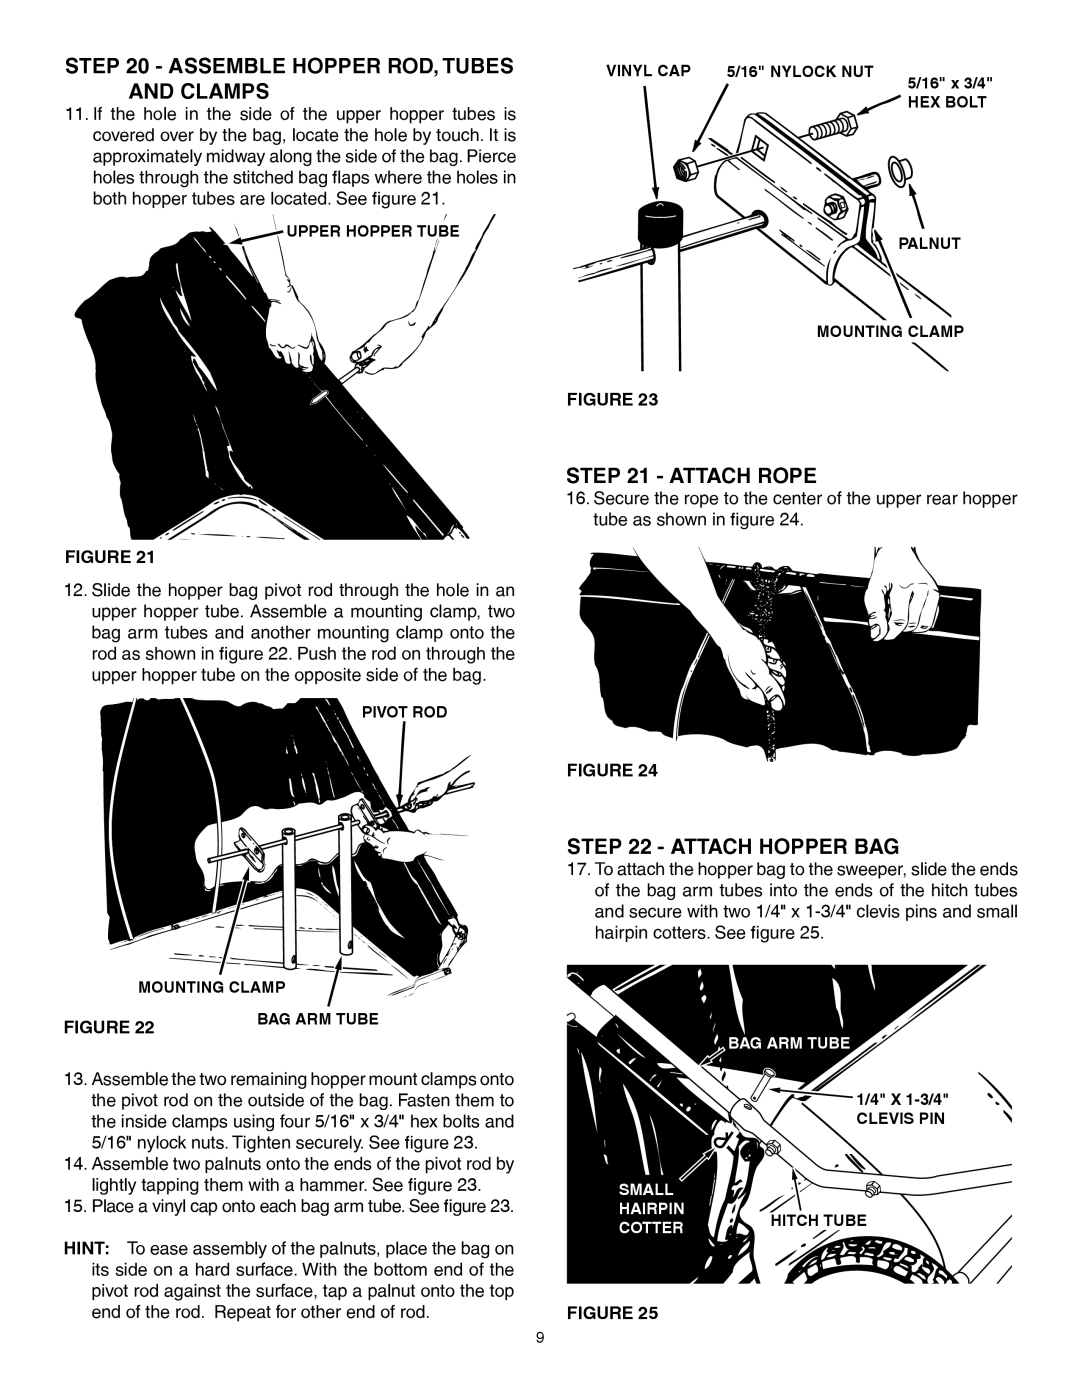 Husqvarna 45-0352 manual Assemble Hopper Rod, Tubes And Clamps, Attach Rope, Attach Hopper Bag 